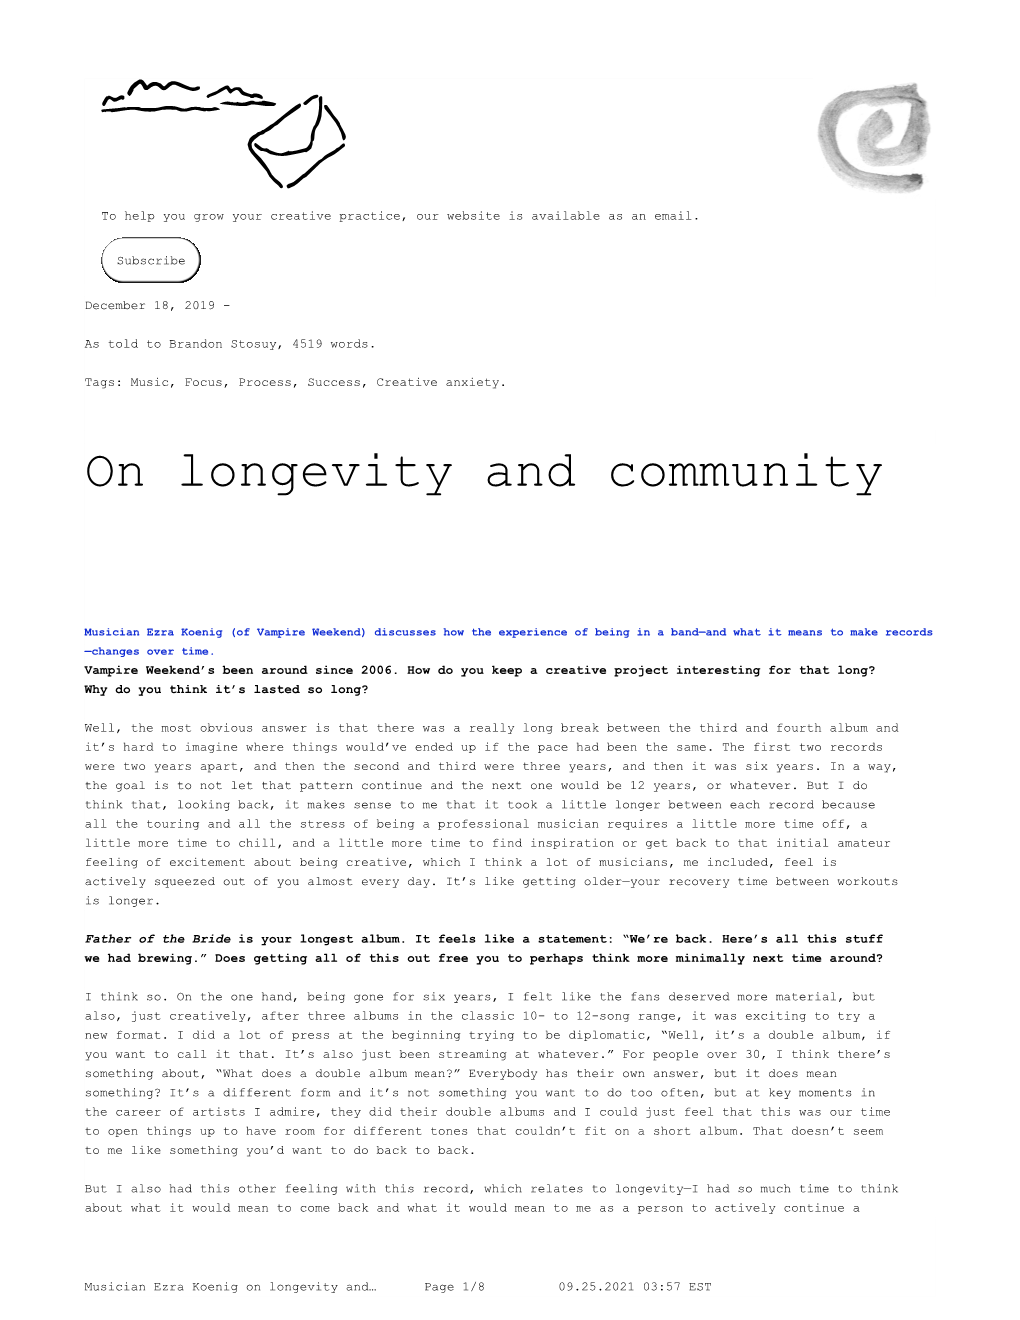 Musician Ezra Koenig on Longevity and Community